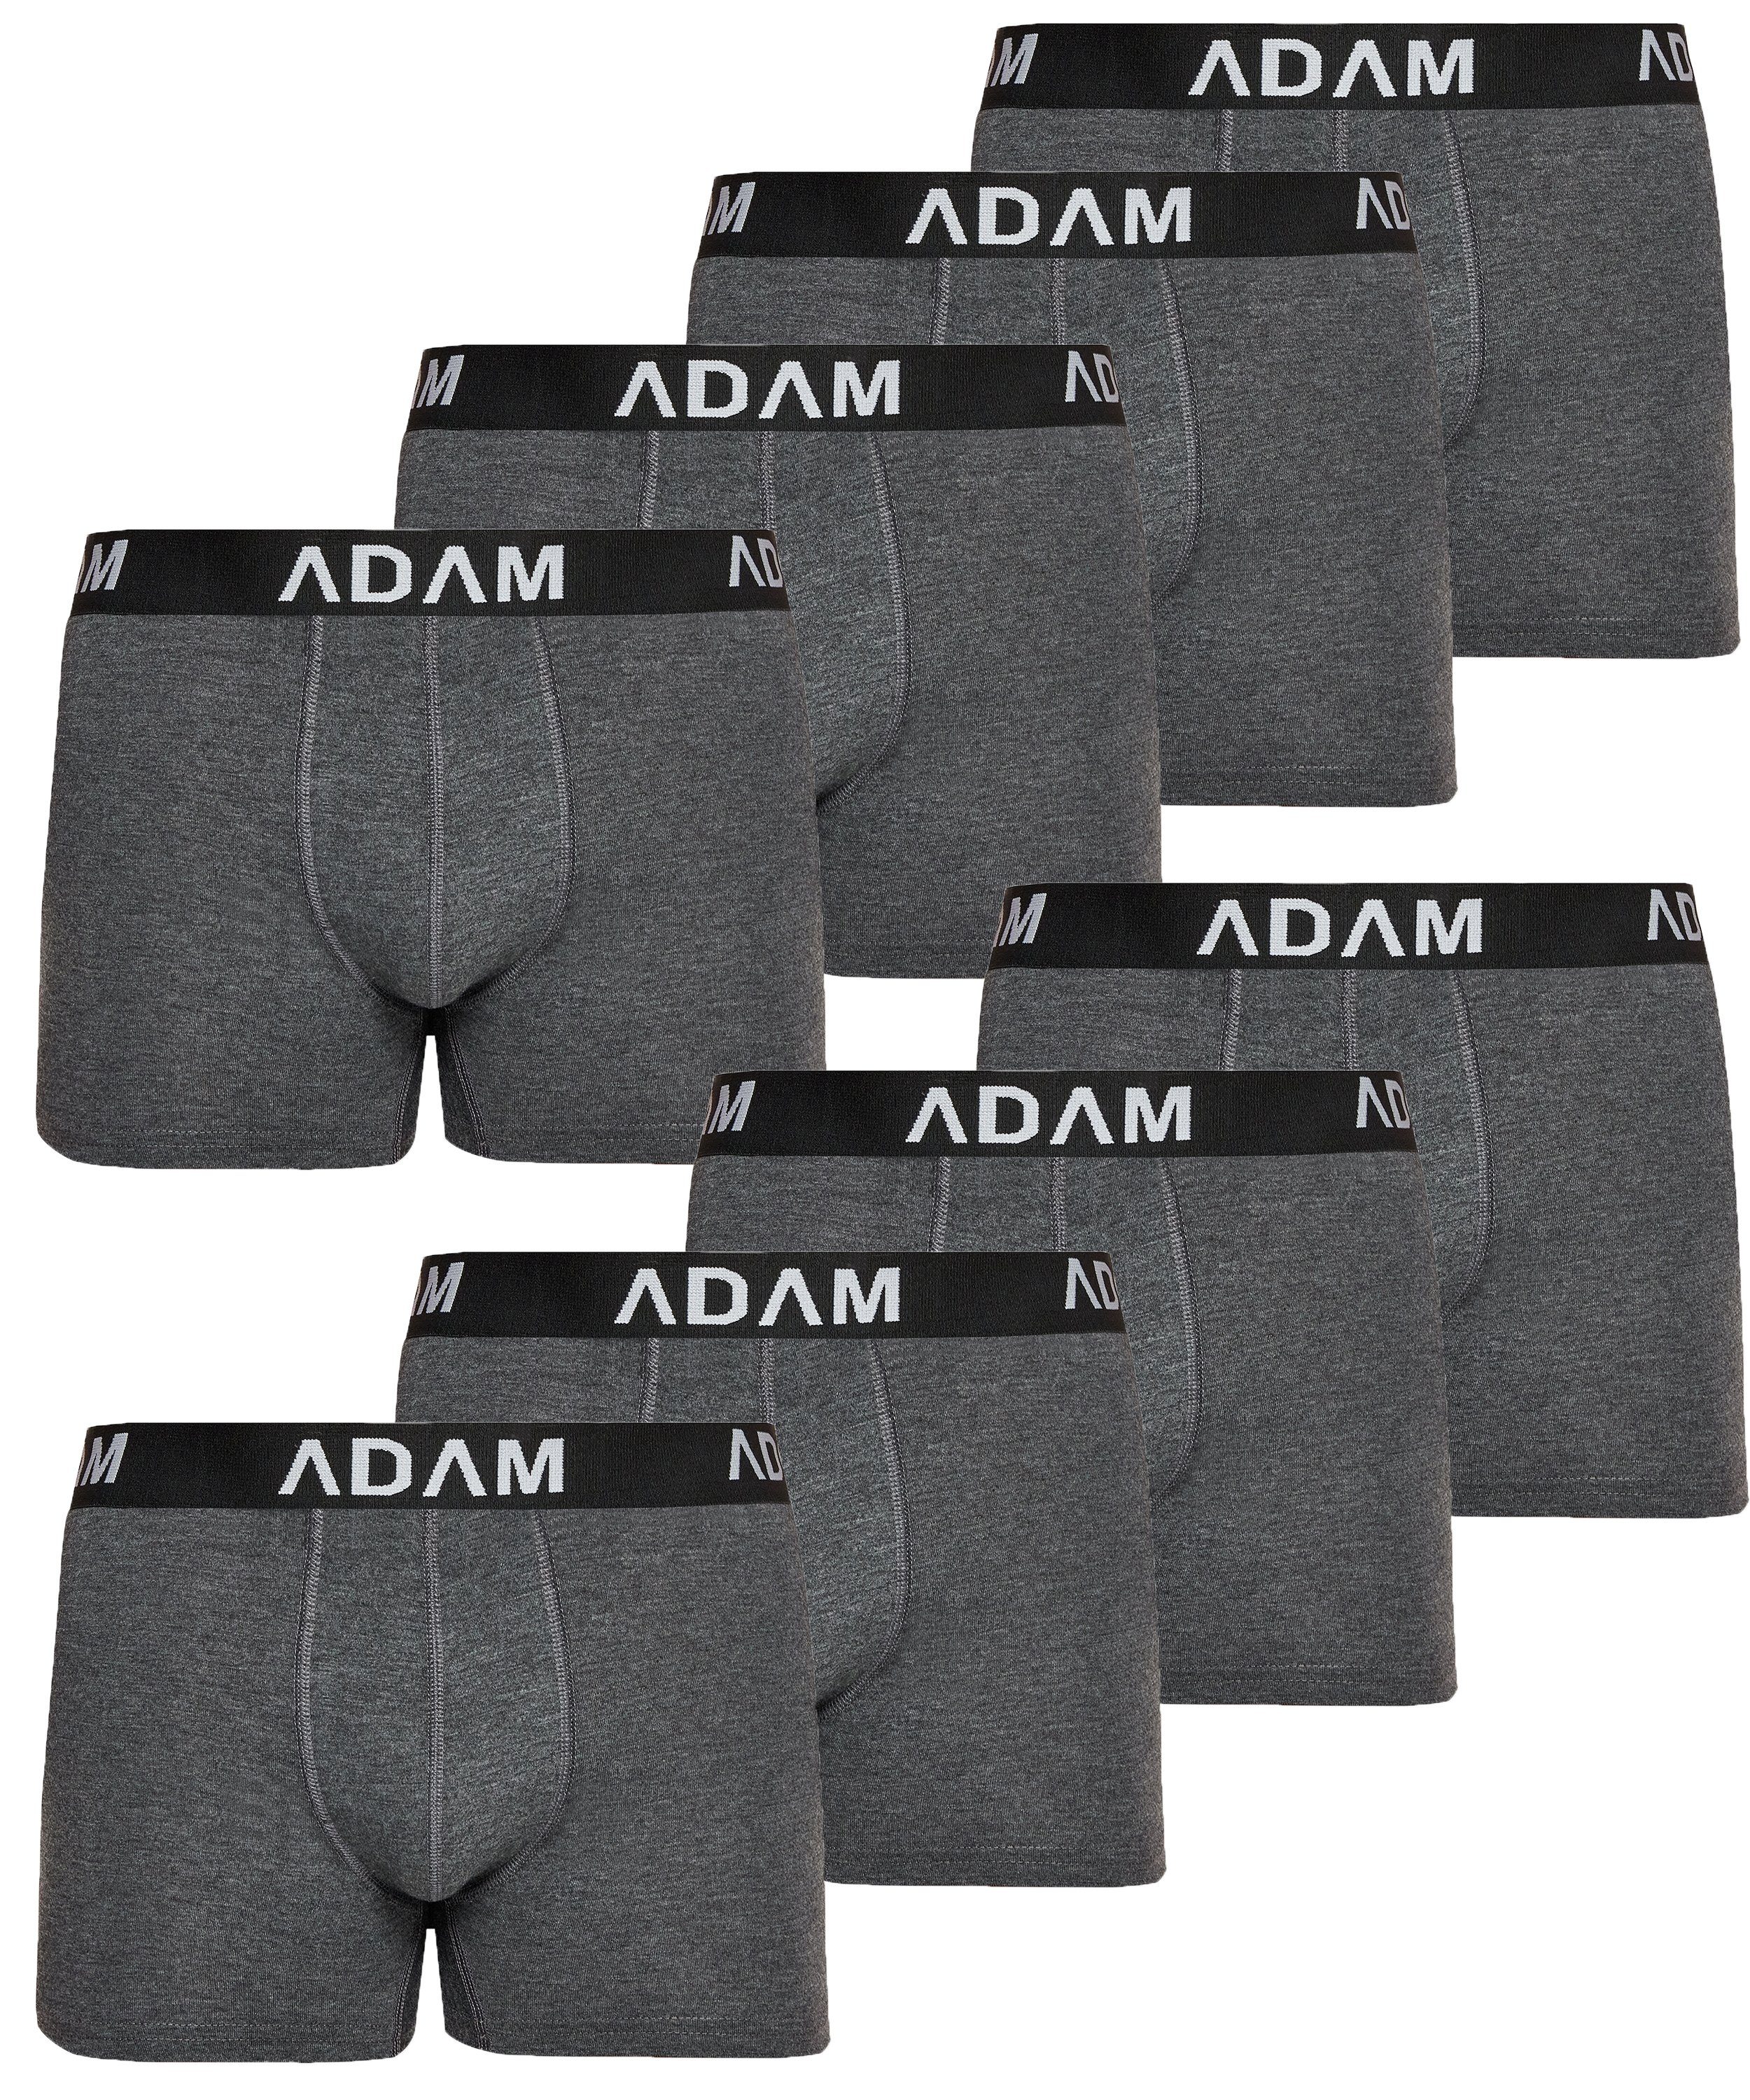 ADAM JEANS Boxershorts Boxer-1 (8-St., 6er Set, 8er Set, 10er Set, 12er Set) Boxershorts Herren Boxer Shorts Männer Unterhosen Trunks Underwear 8er Set Box-B